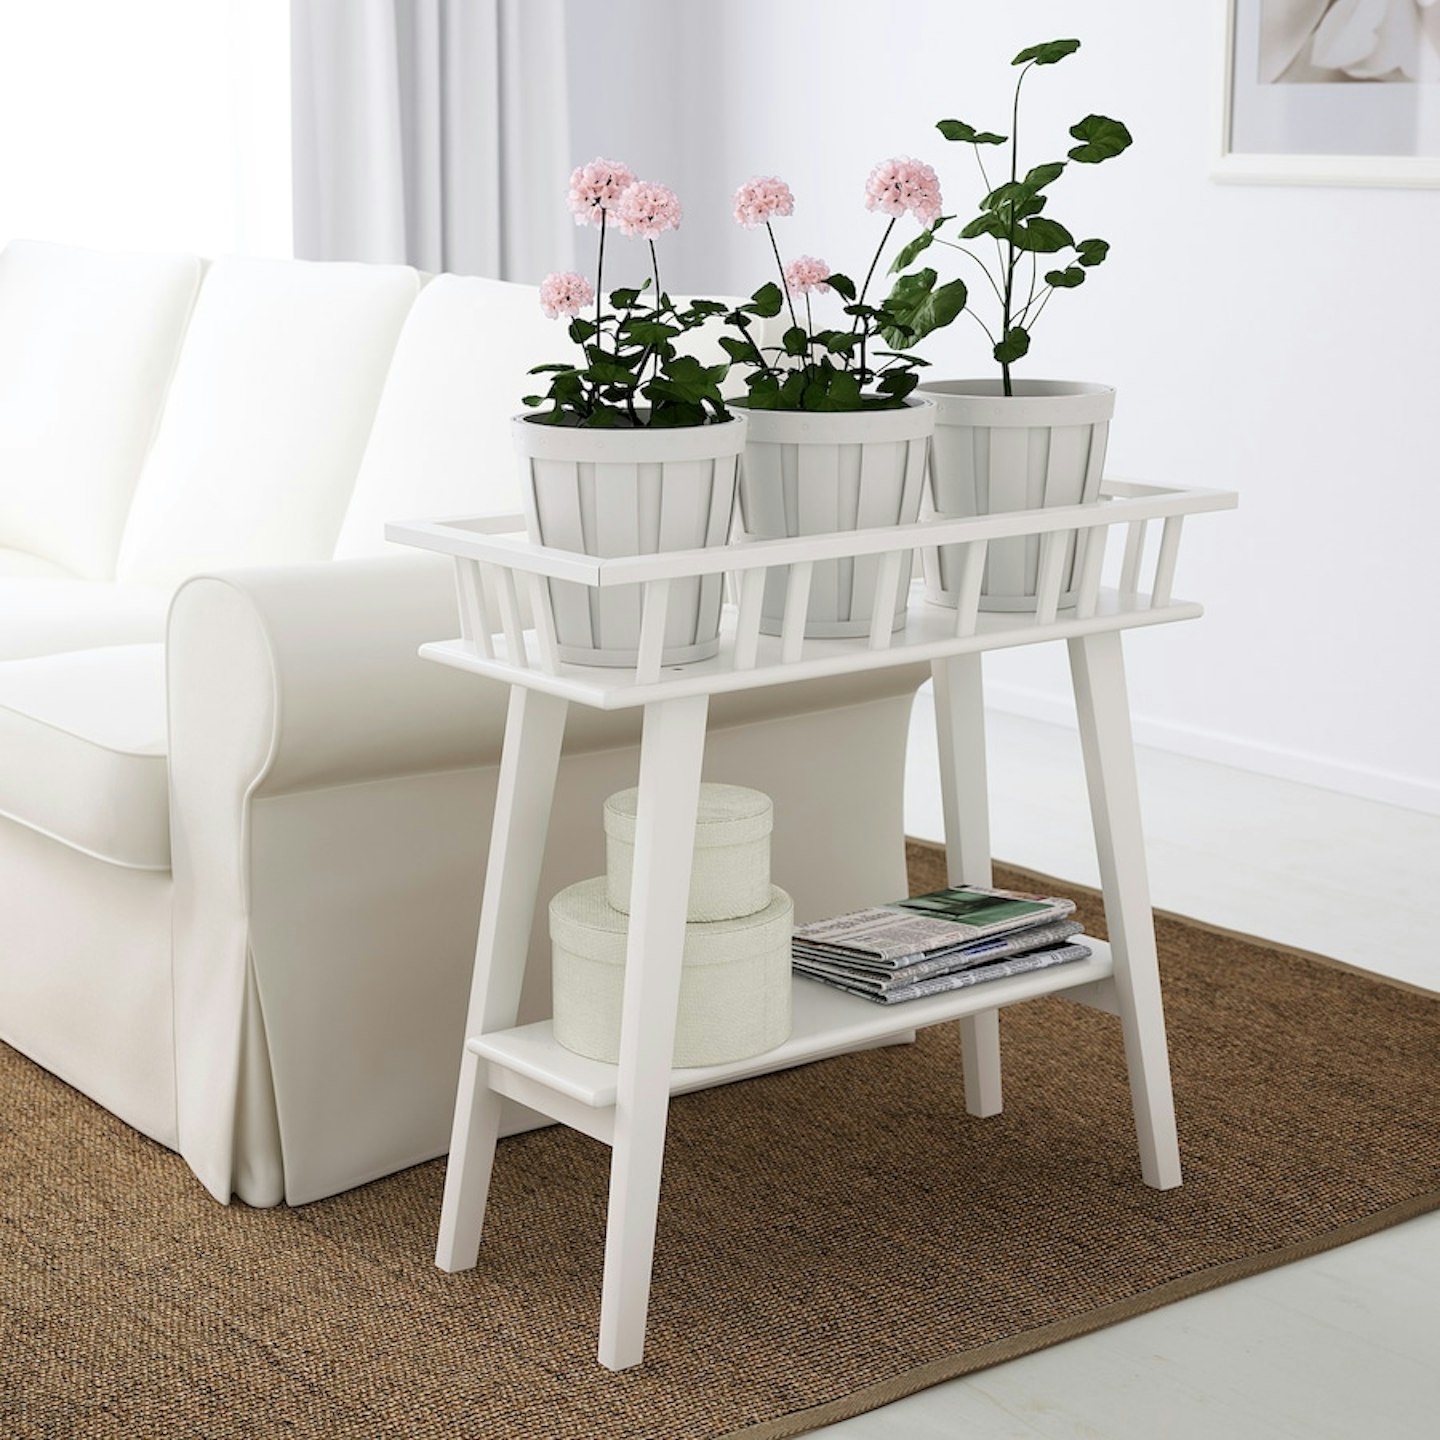 IKEA, Lantliv Plant stand, white 68 cm, £50